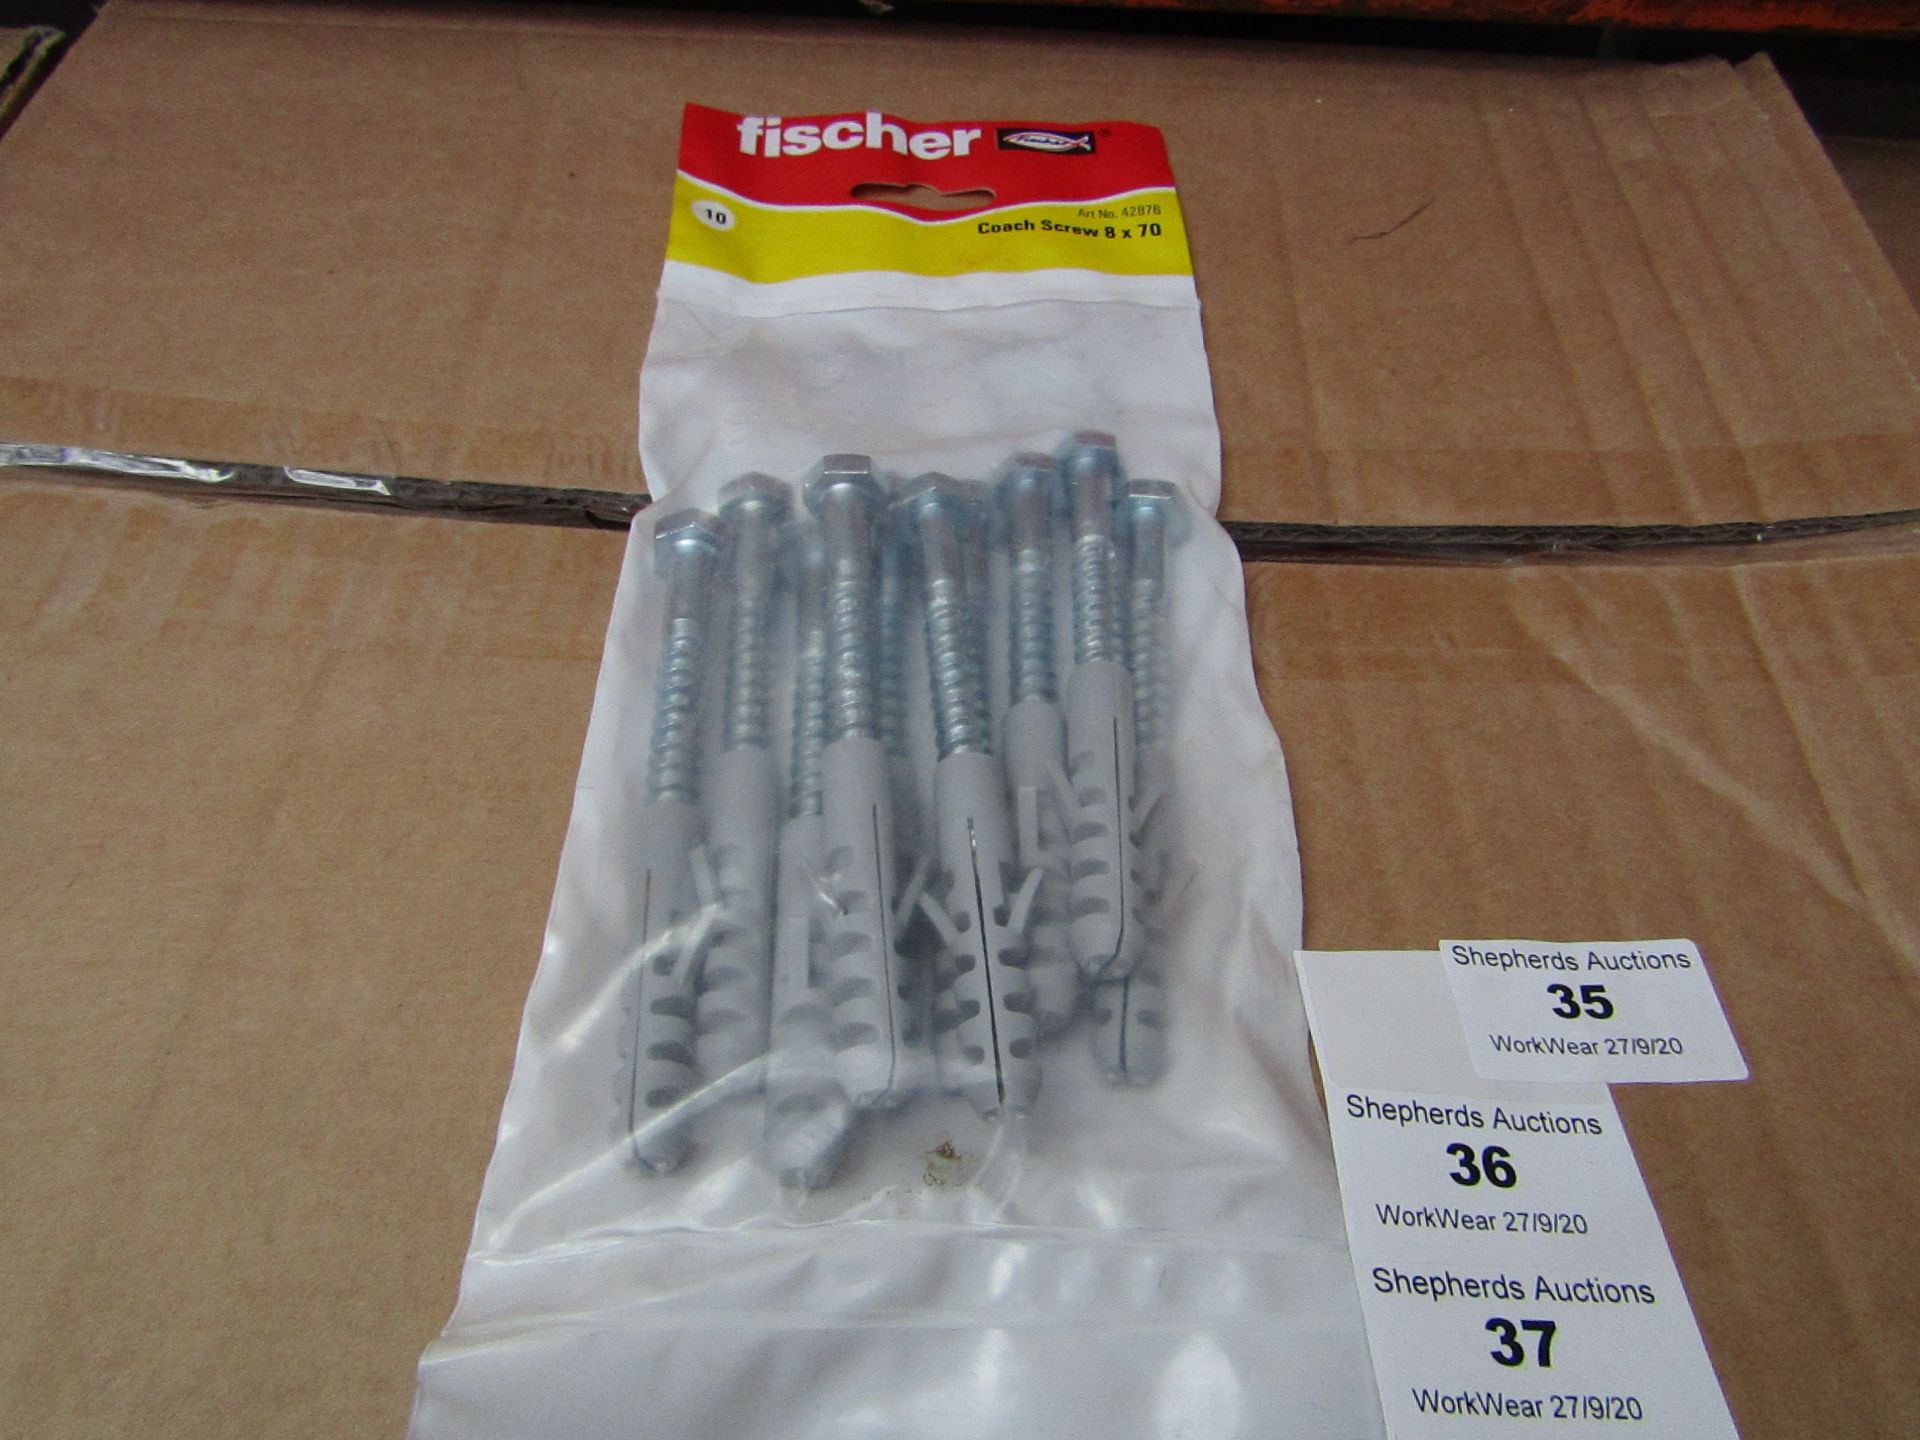 5x Fischer - Coach Screw 8 x 70 (Packs of 10) - New & Packaged.